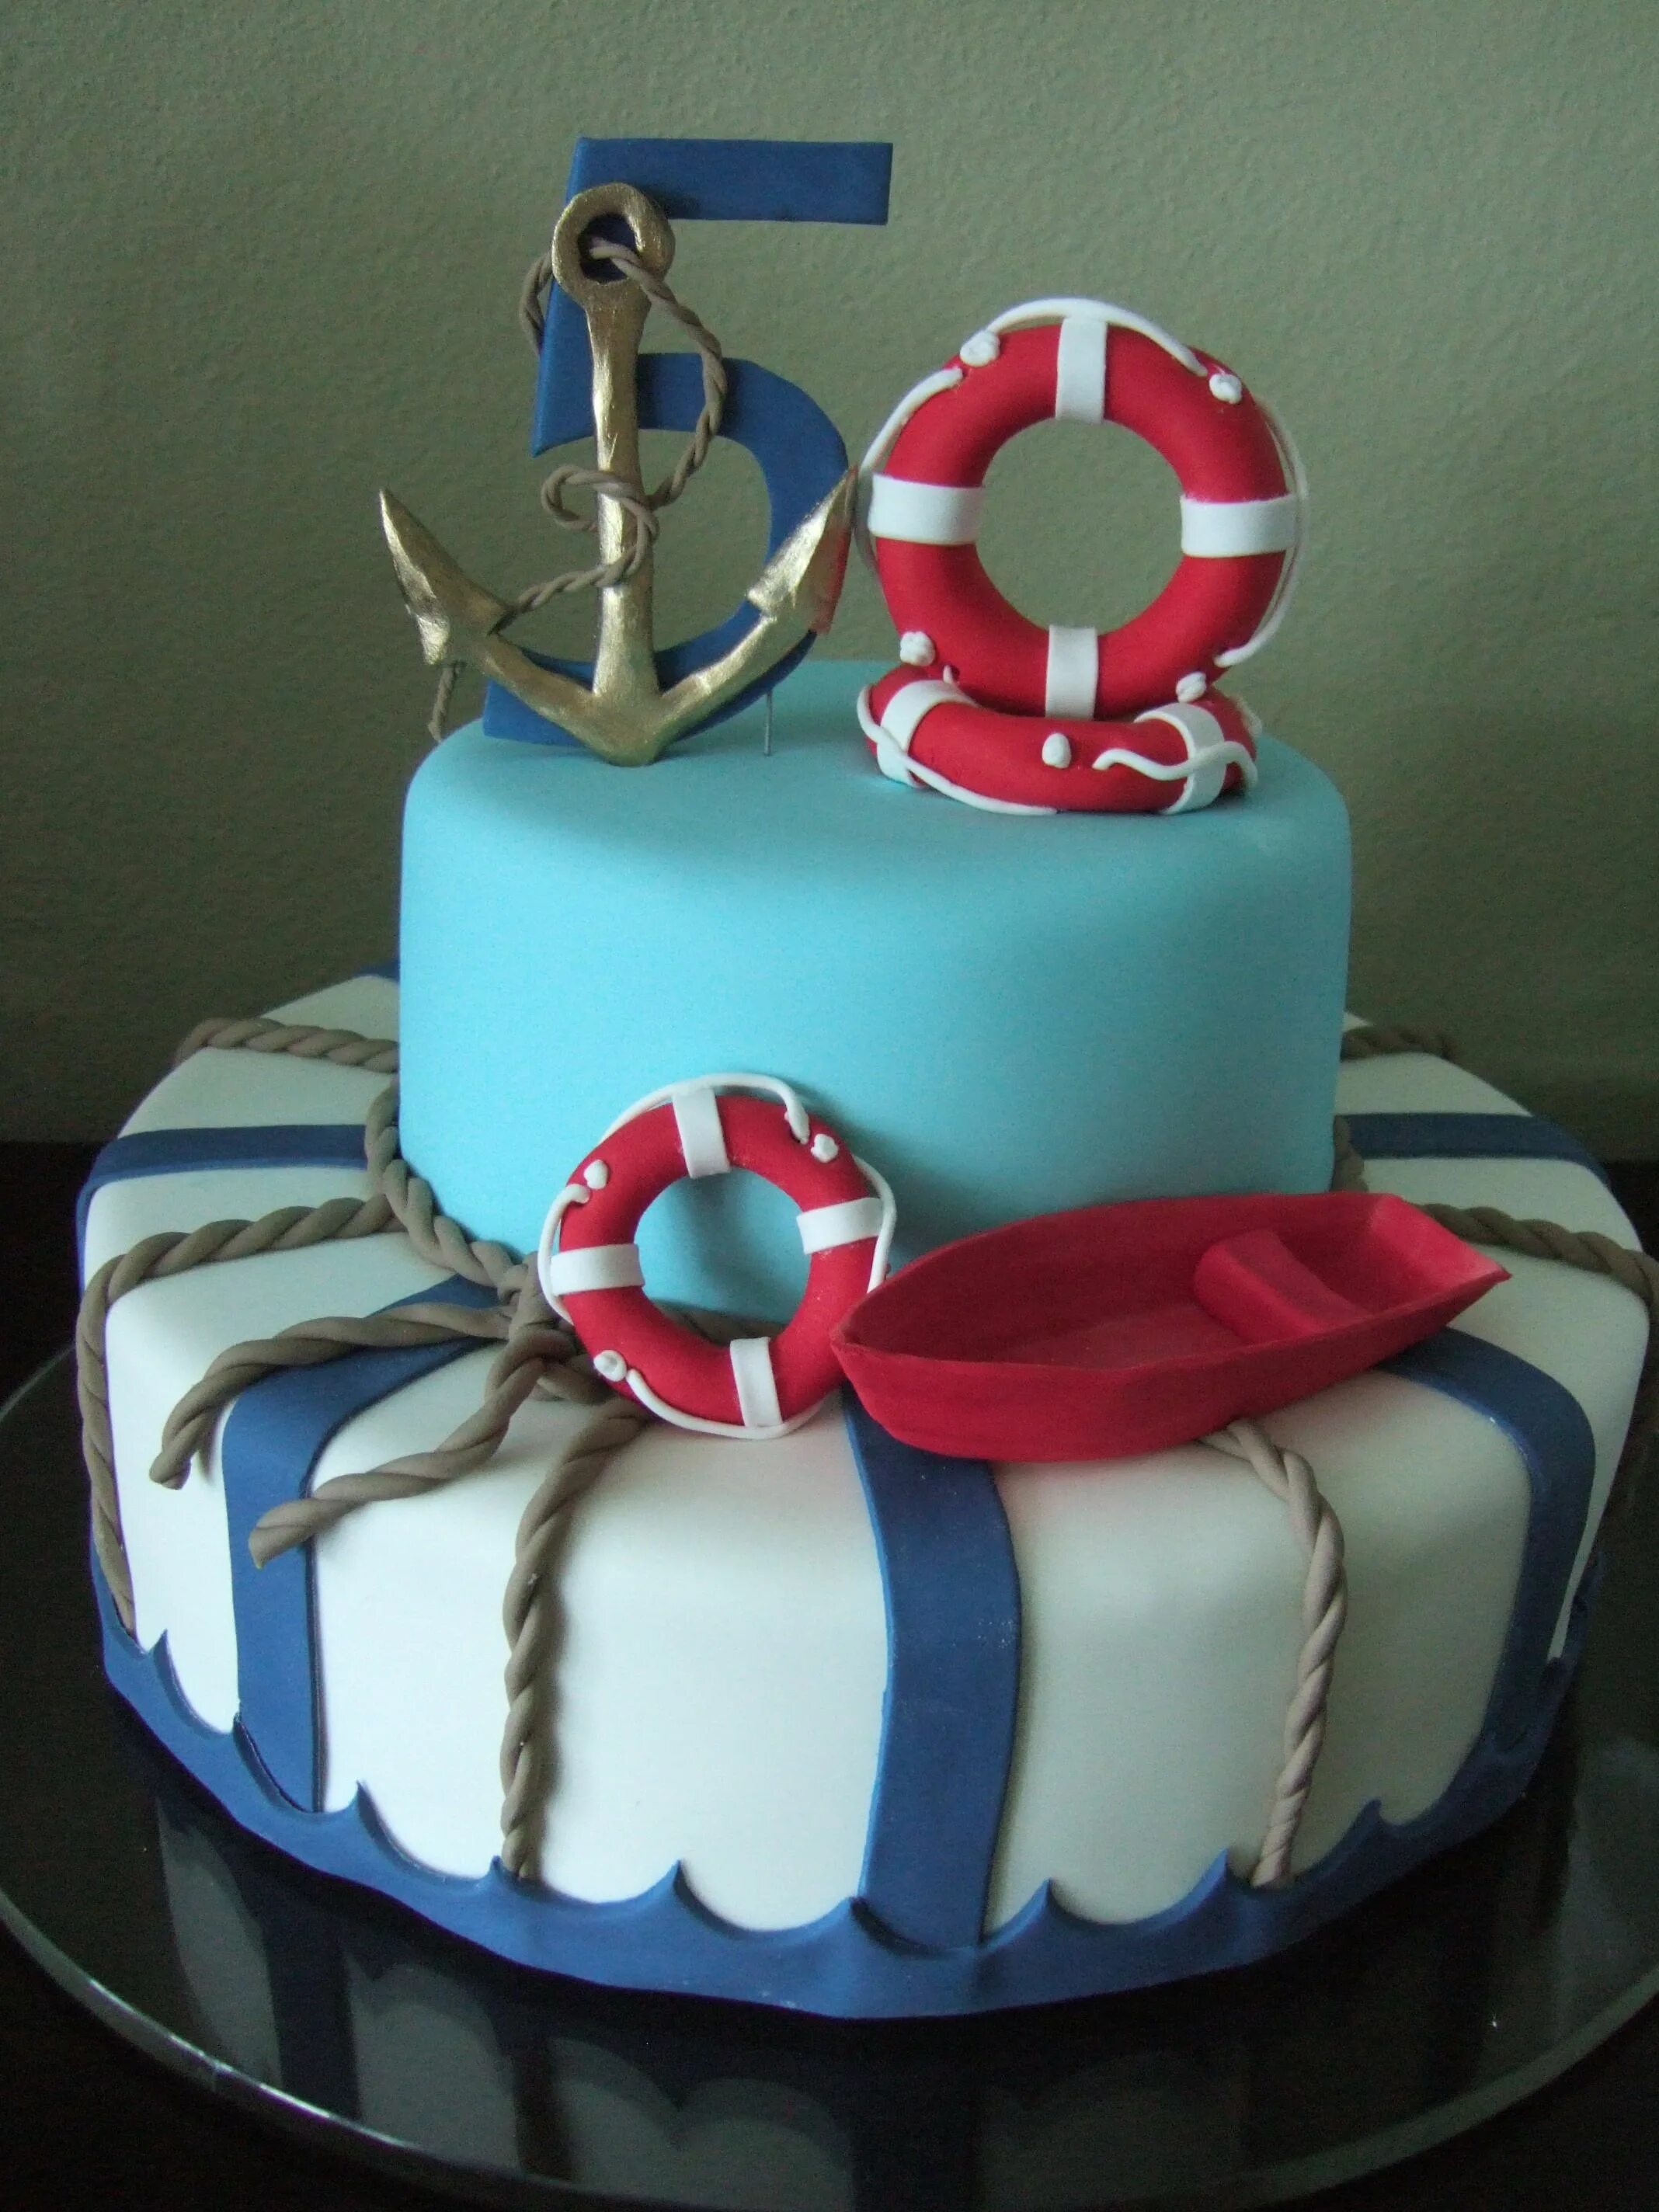 Морской день рождения мужчине. Торт морская тематика. Торт в морском стиле. Торт в морском стиле для мужчины. Торт с морской тематикой для мужчины.